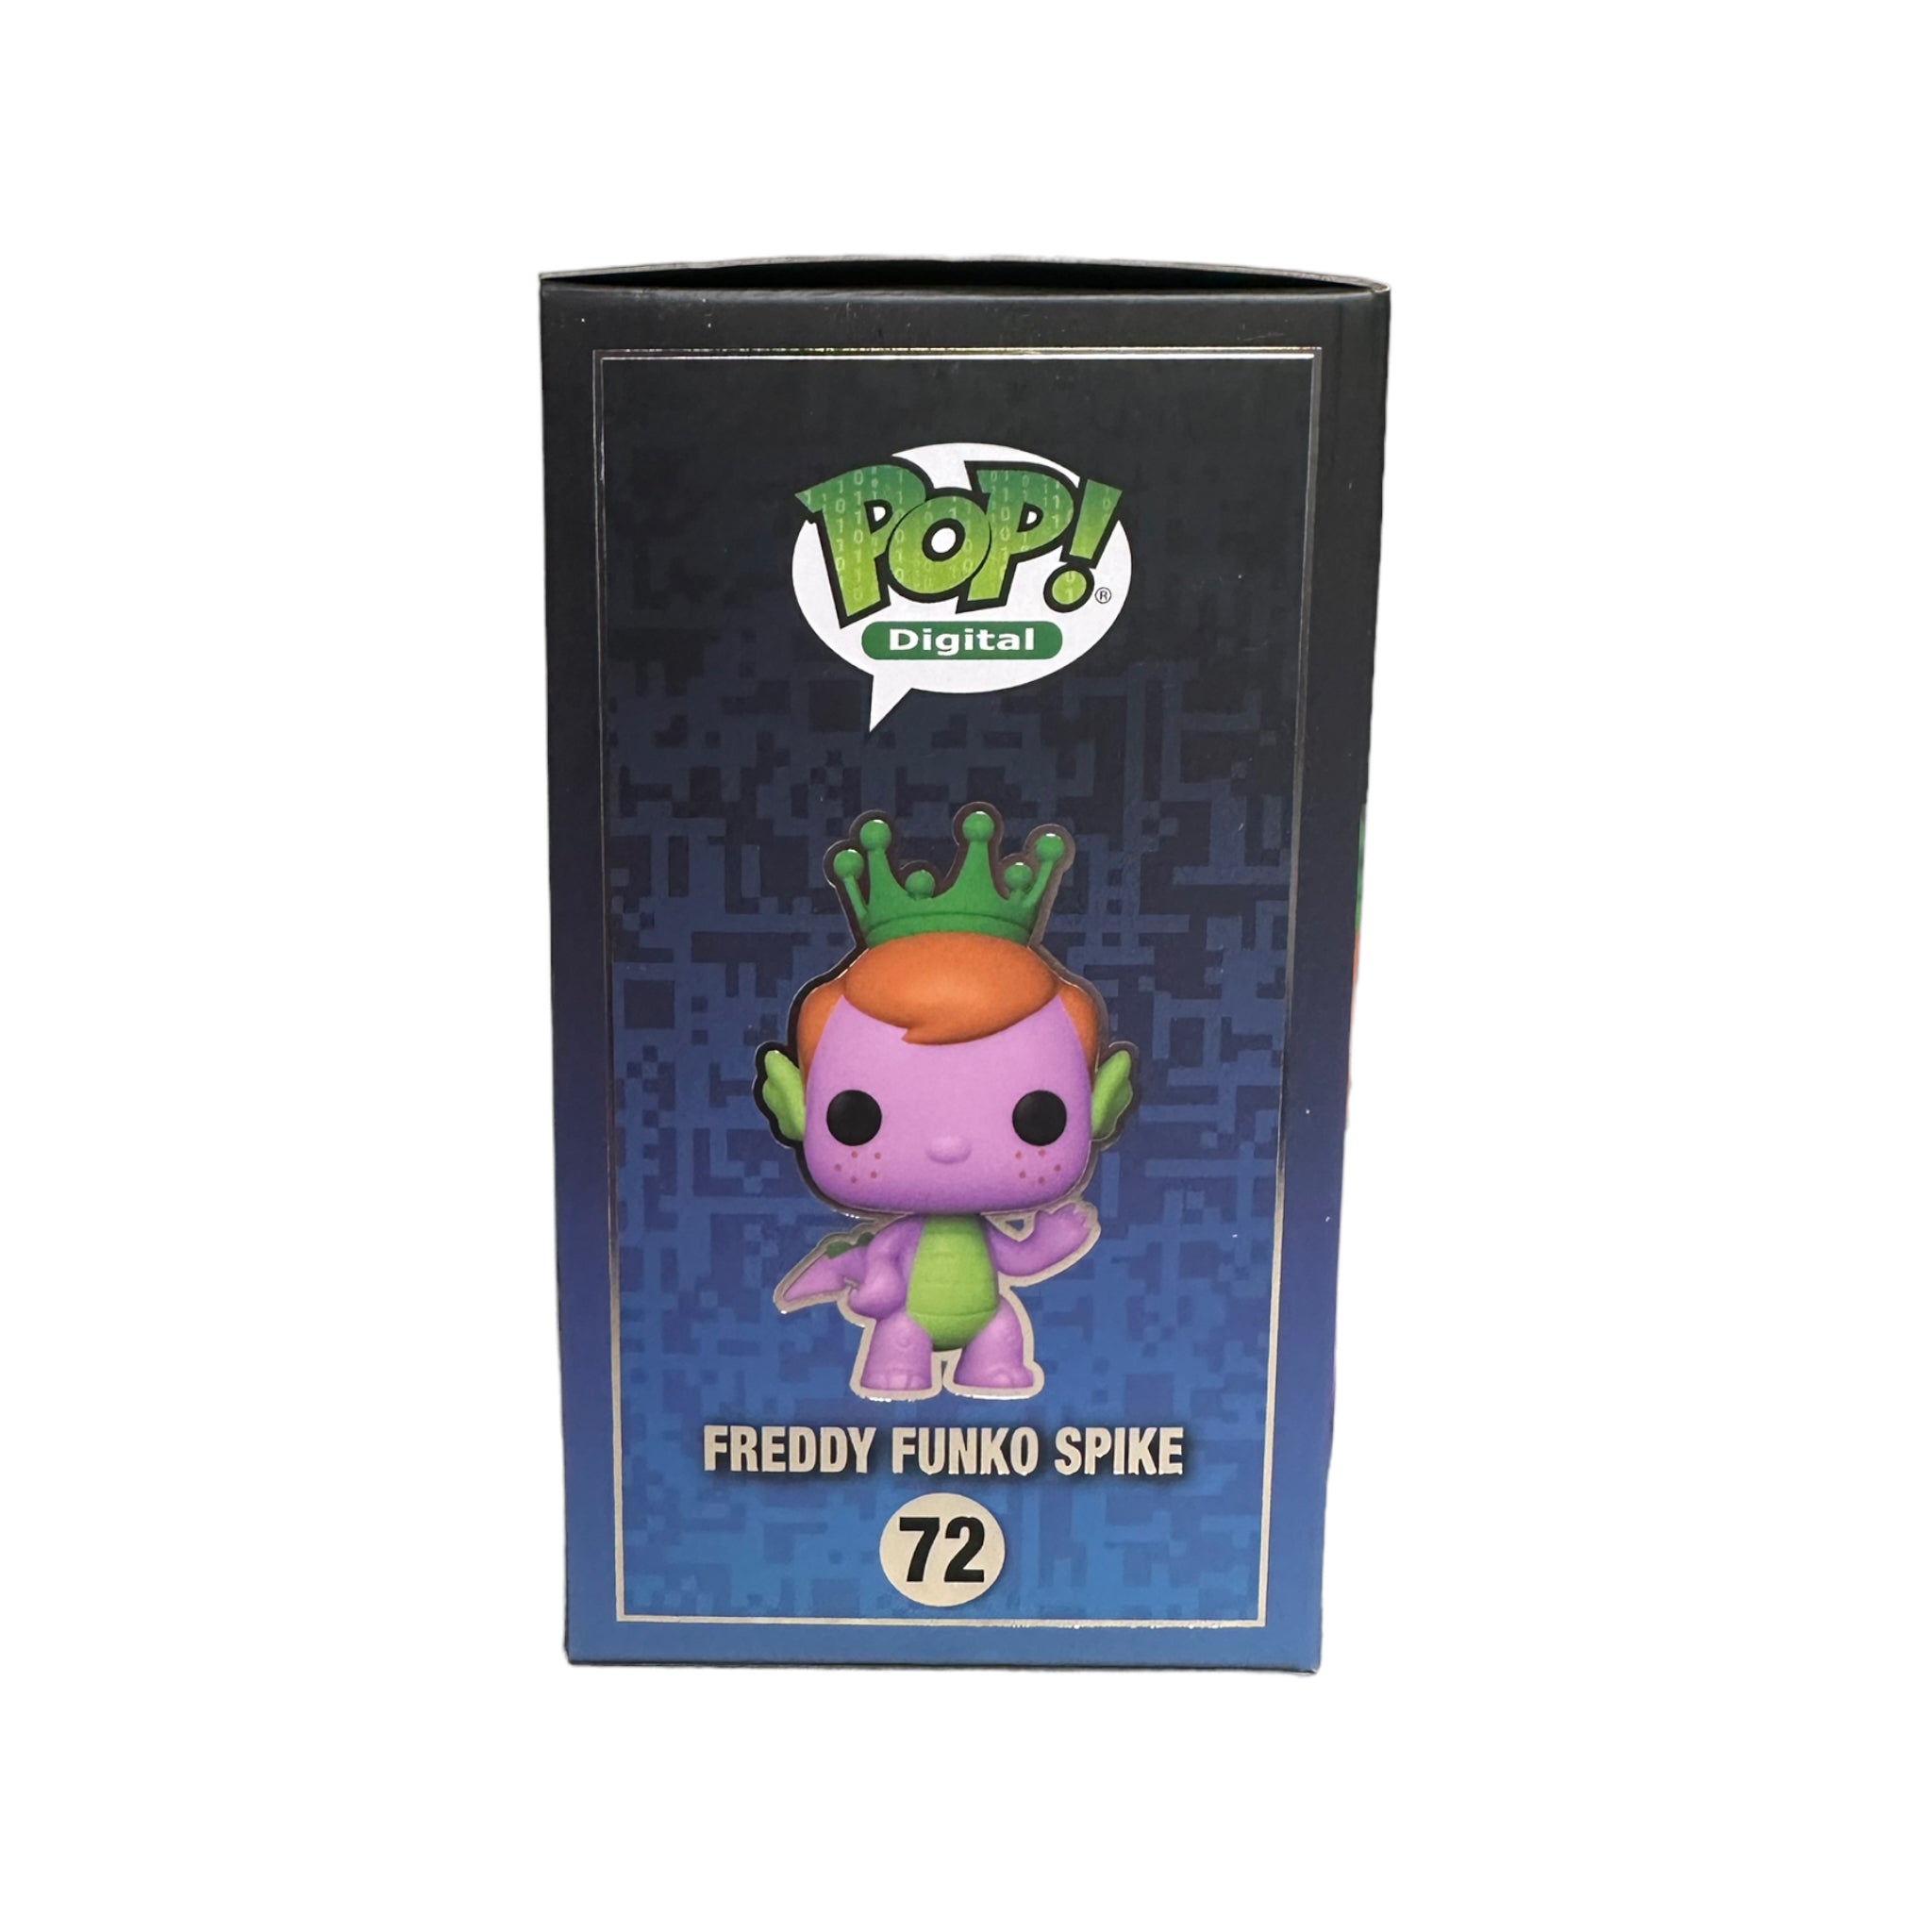 Freddy Funko Spike #72 Funko Pop! - My Little Pony - NFT Release Exclusive LE2400 Pcs - Condtion 8.75/10